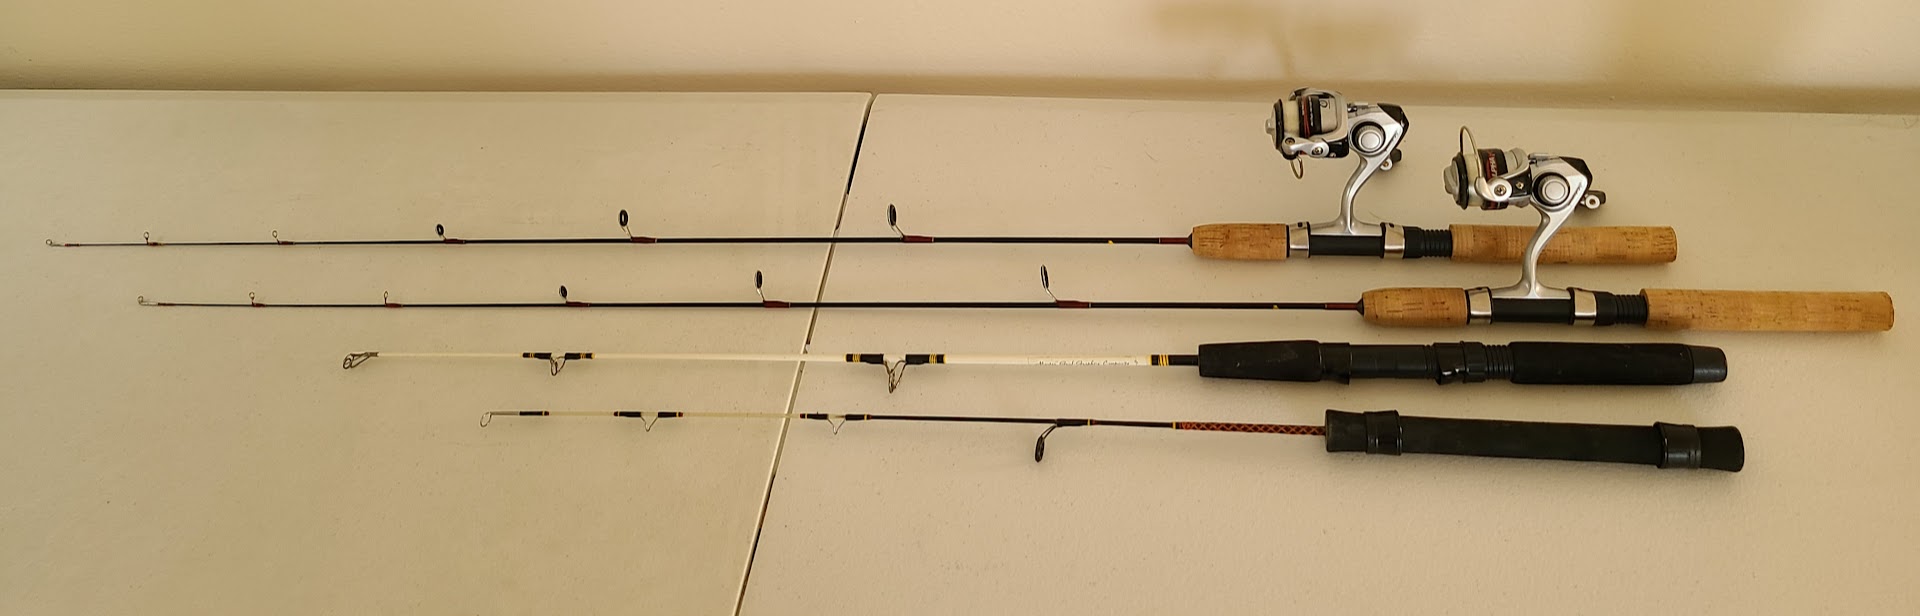 Micro-fishing-rods